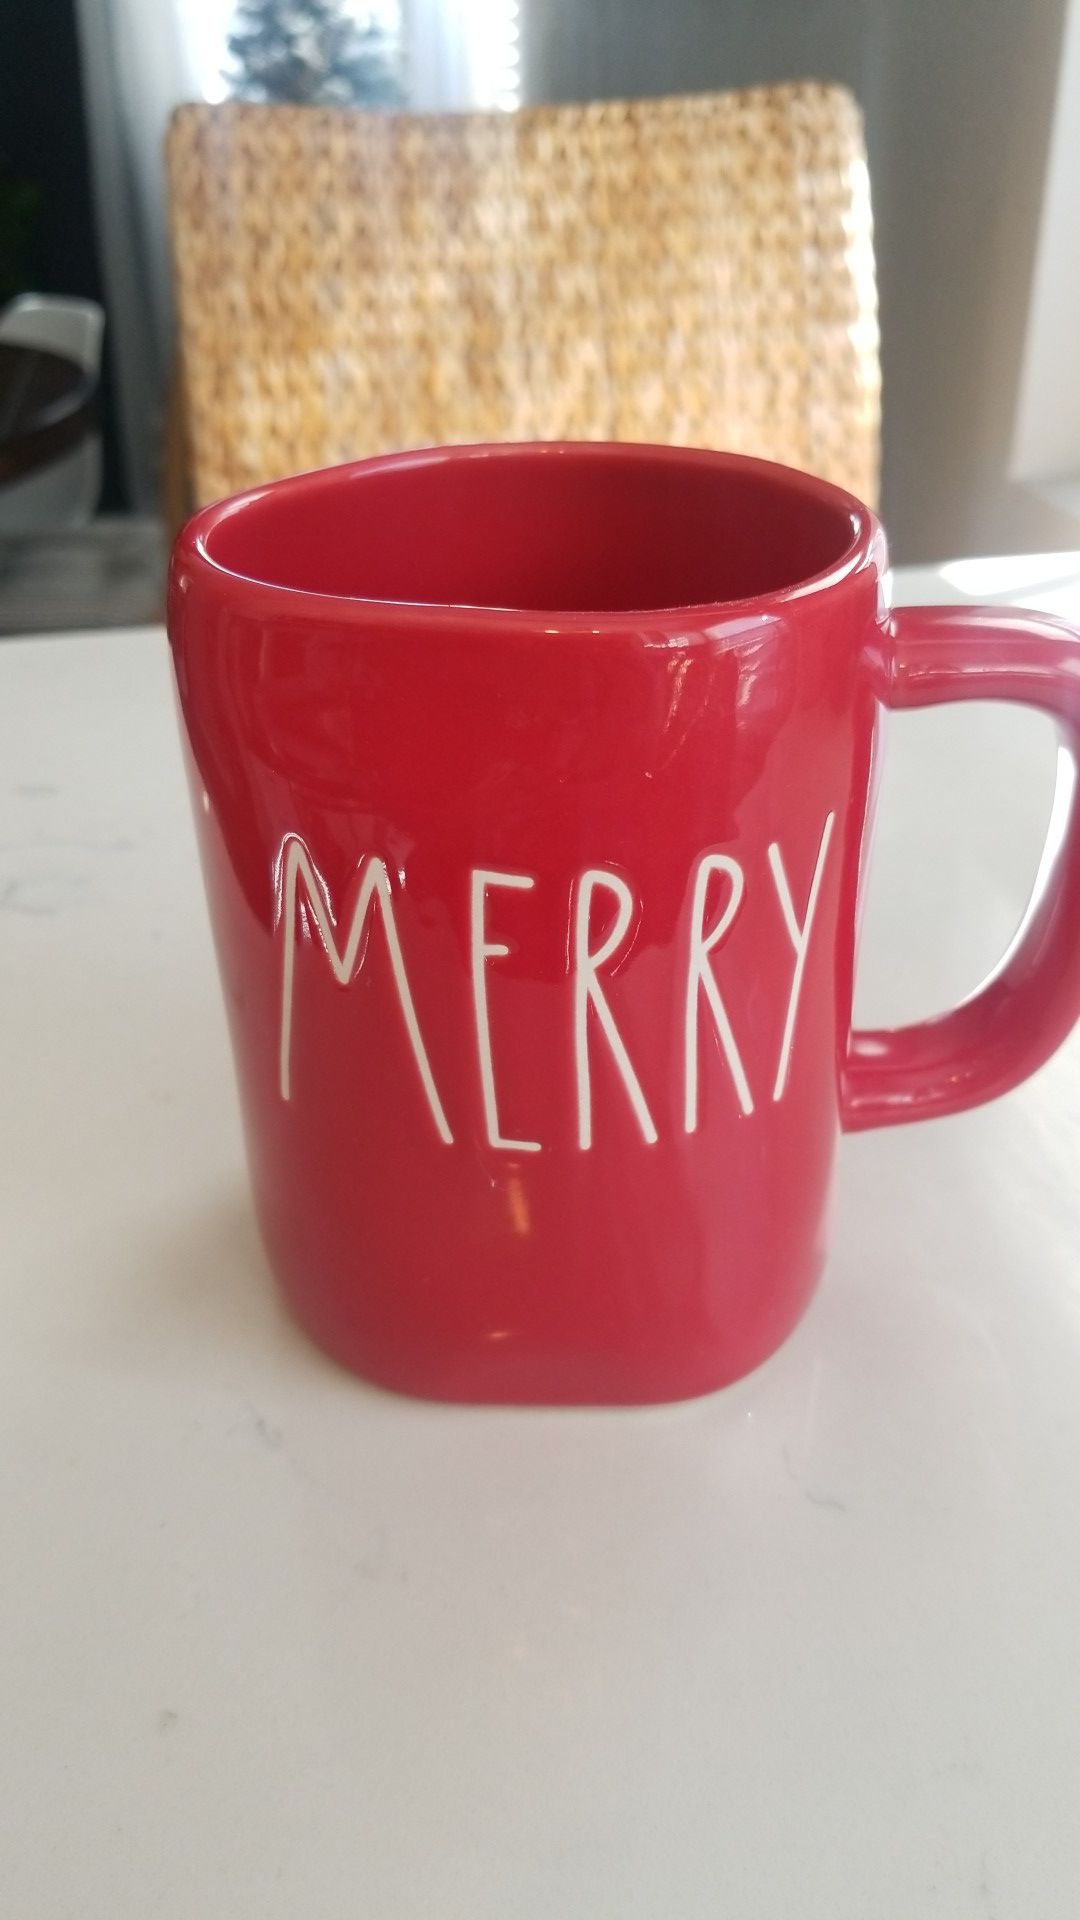 Merry Raedunn Coffee mug